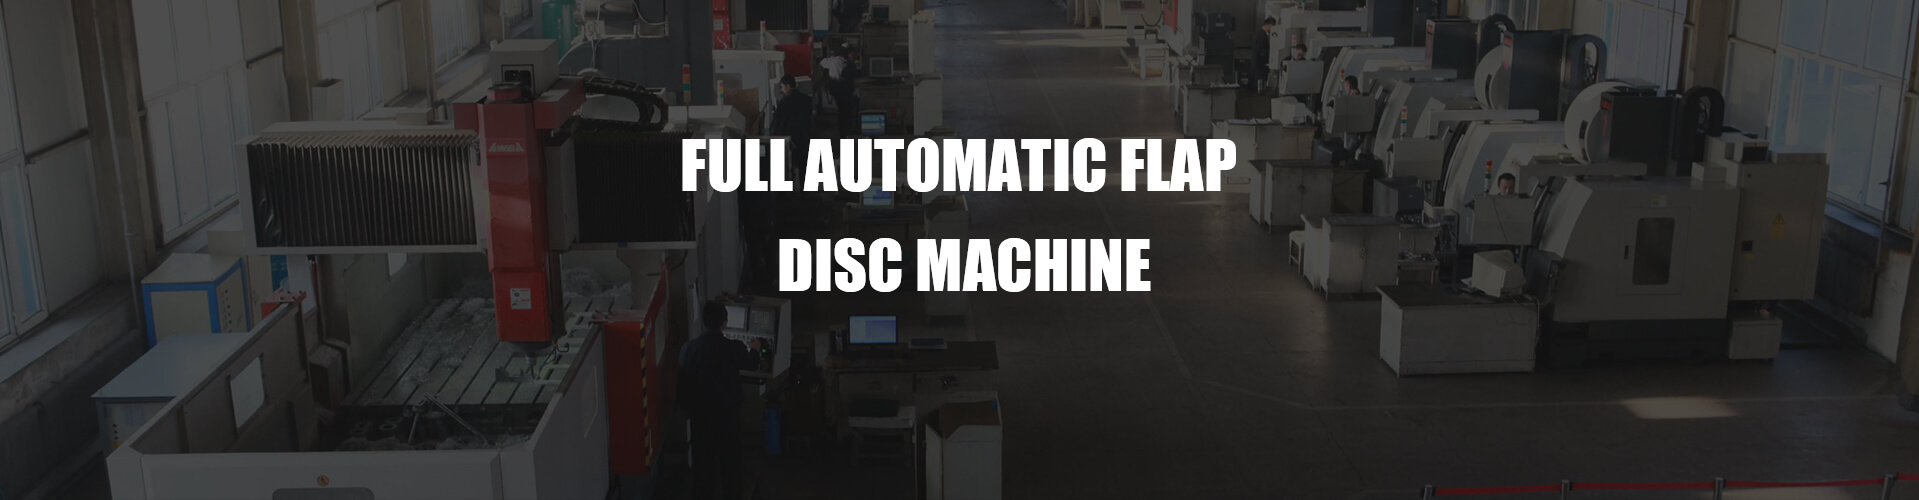 Full-auto Flap Disc Machine